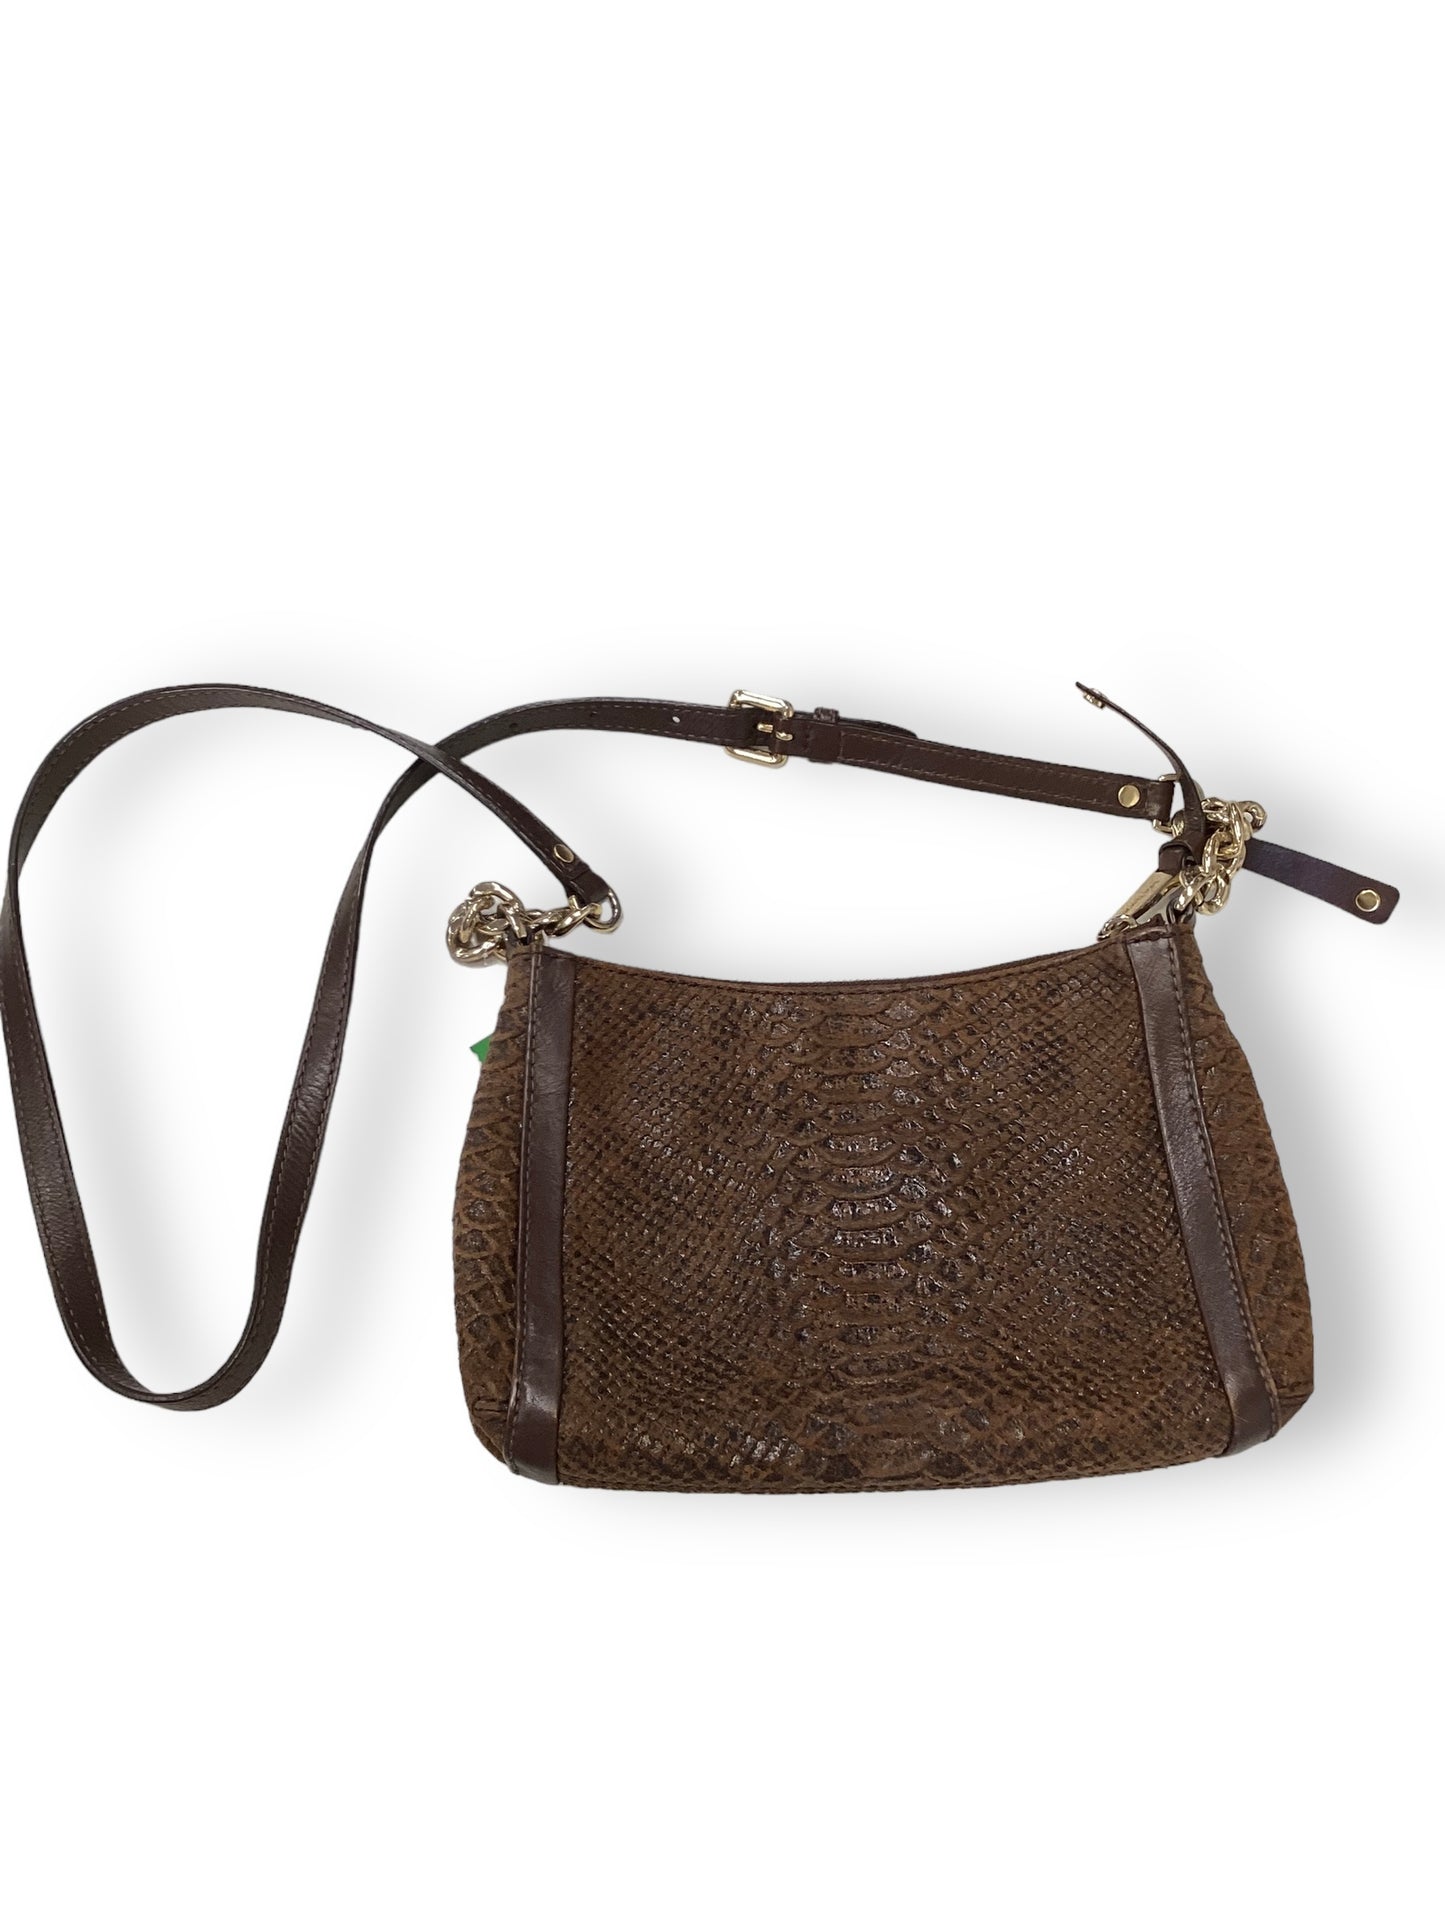 Handbag Designer By Michael Kors  Size: Small